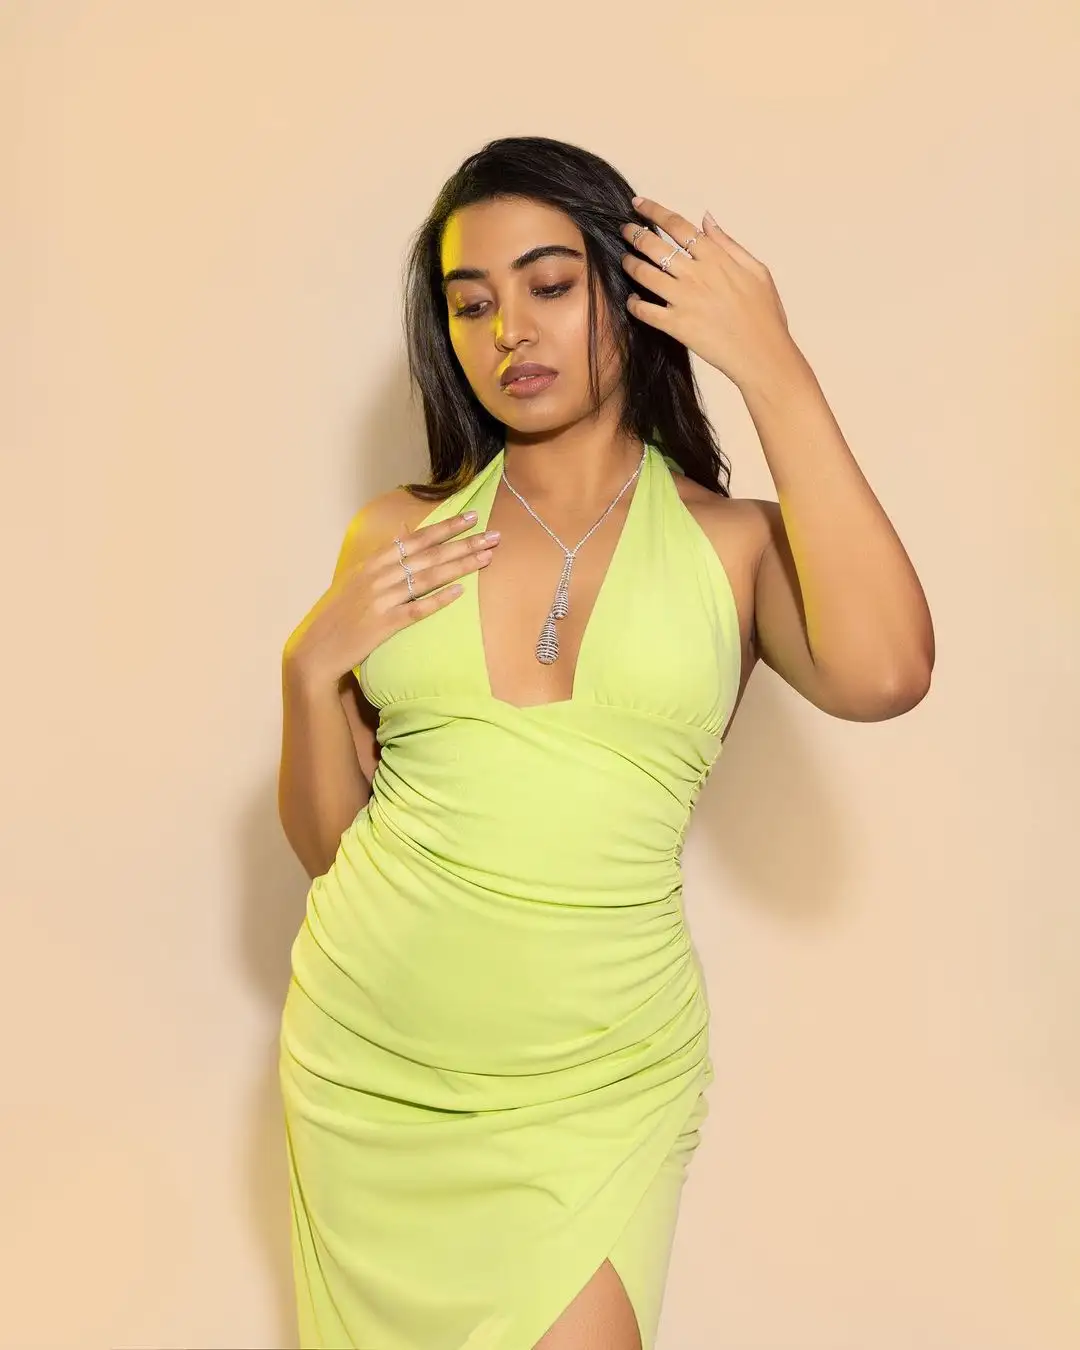 Shivathmika Bold photos in Short Dress 